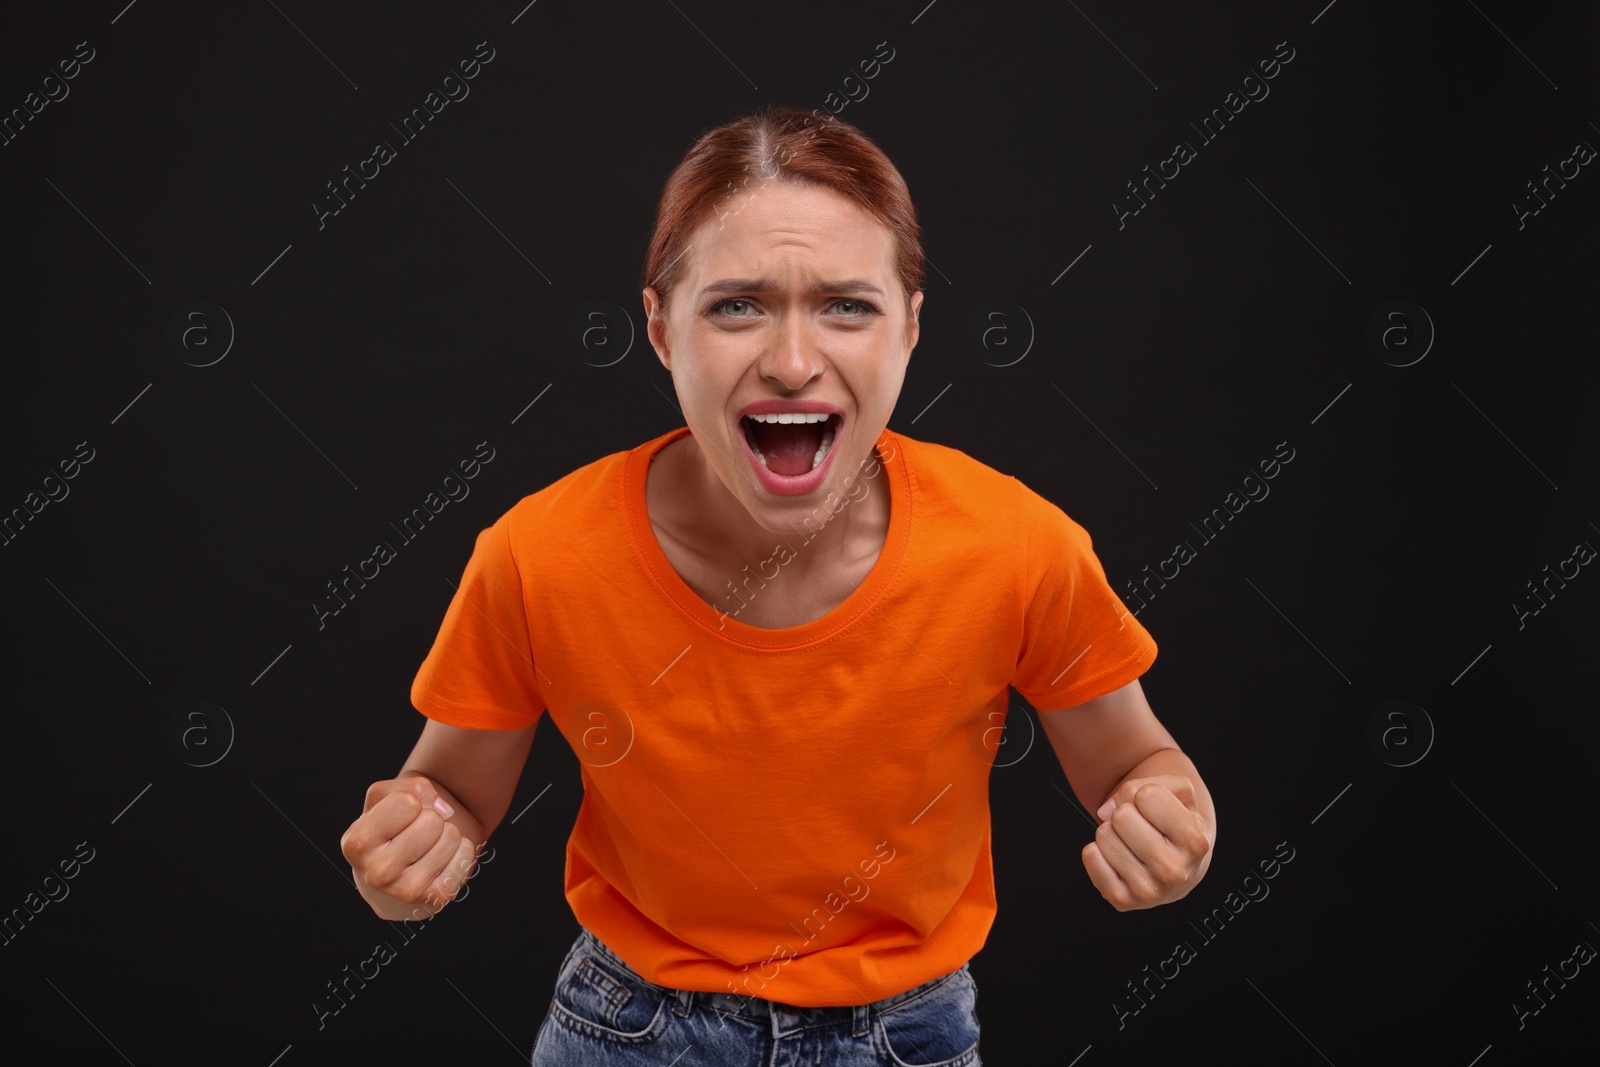 Photo of Emotional sports fan in orange t-shirt on black background